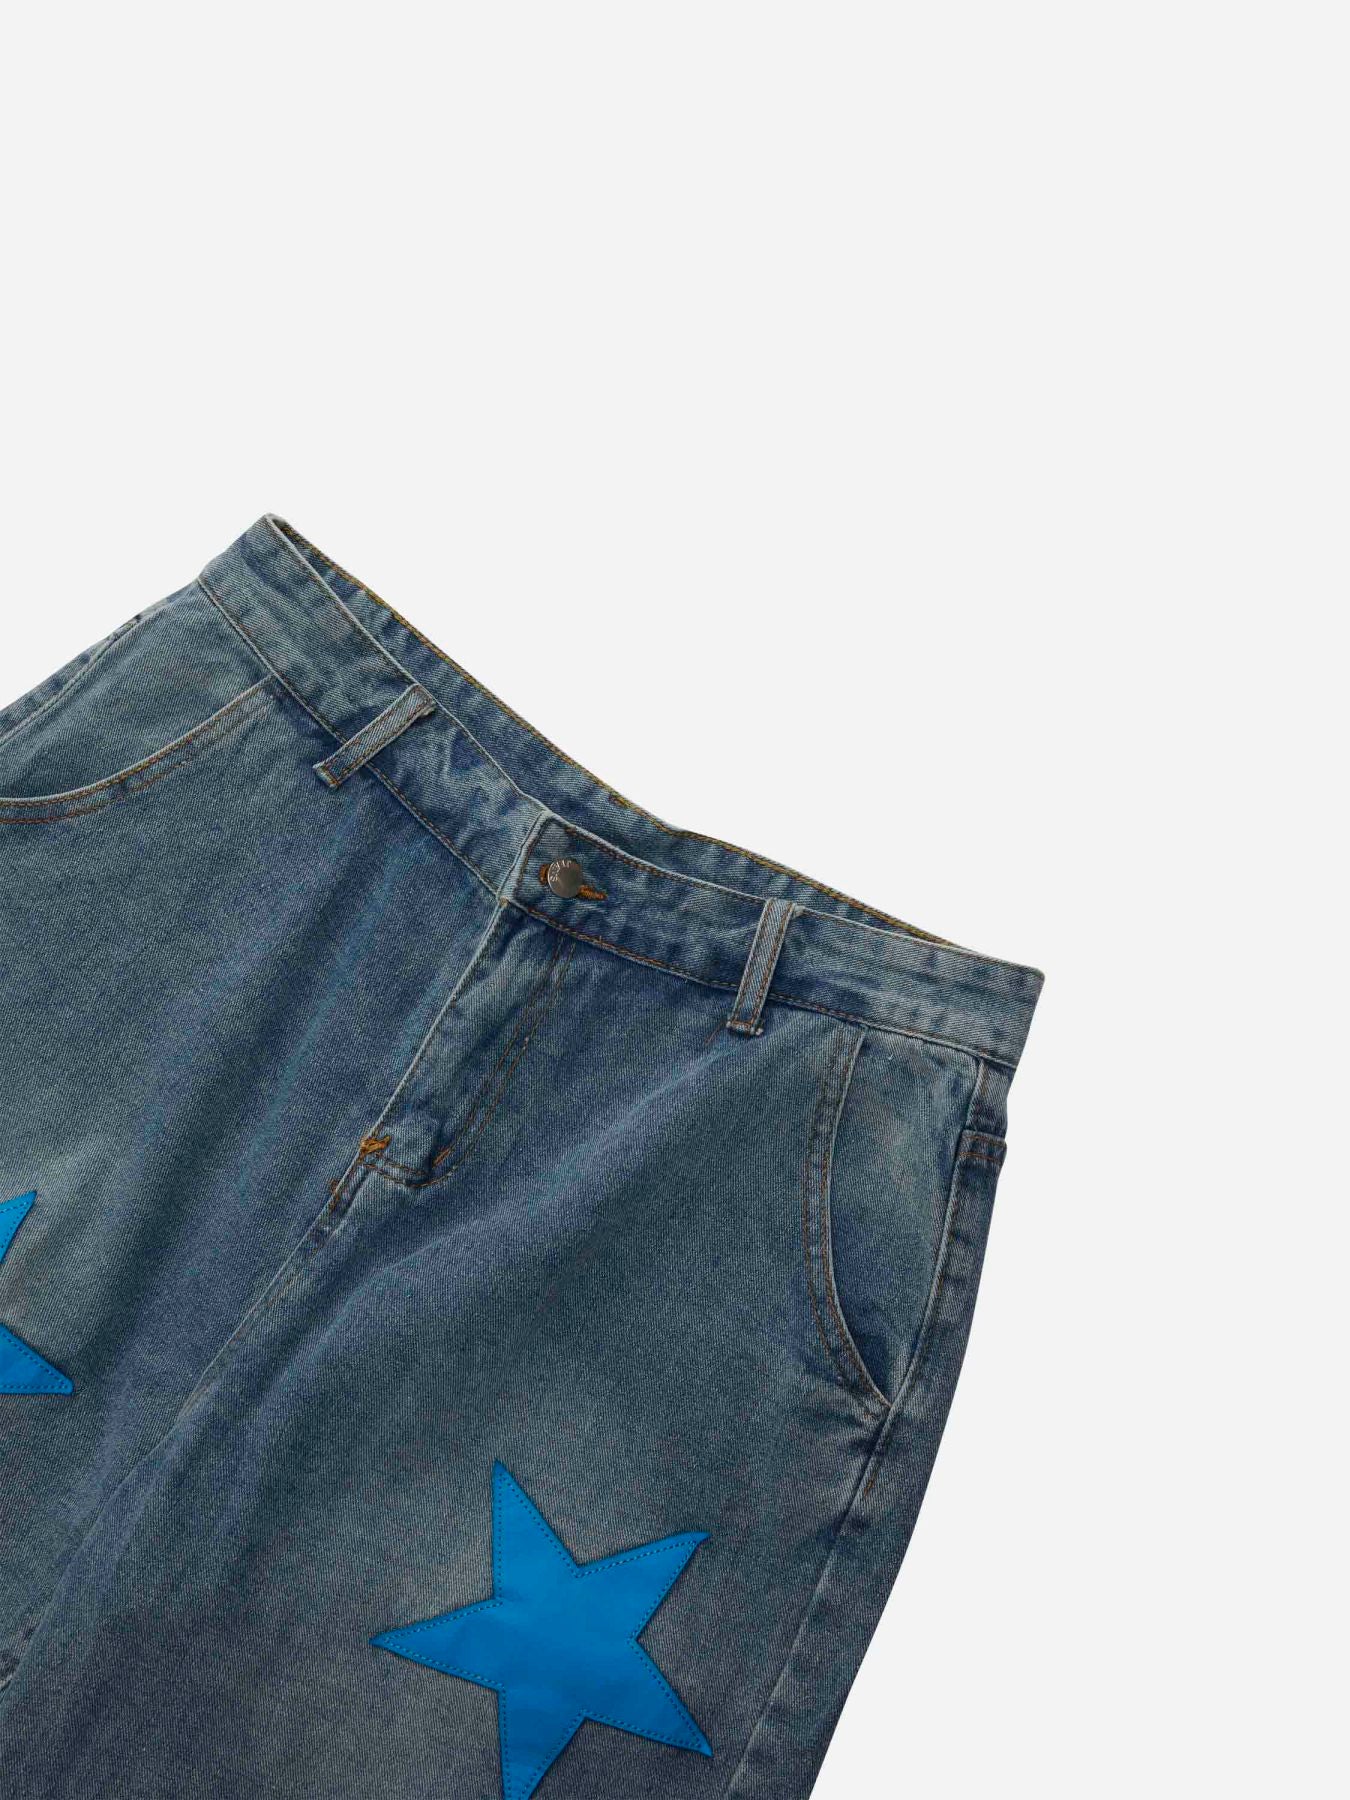 Thesupermade Star Embroidered Denim Shorts Jorts